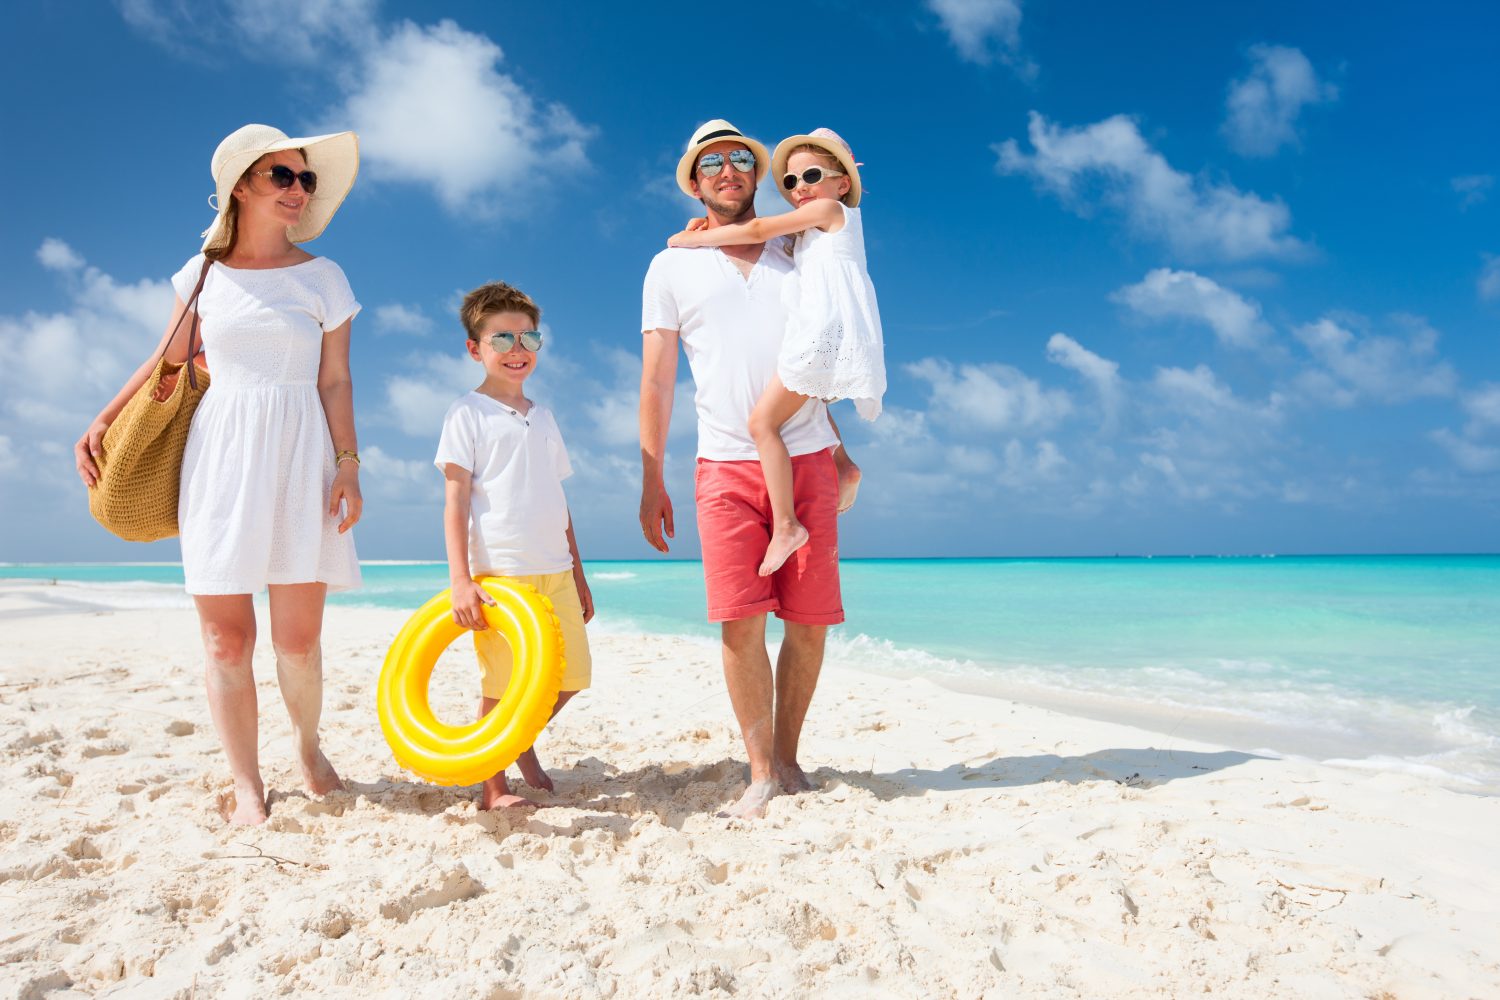 Family on a beach holiday